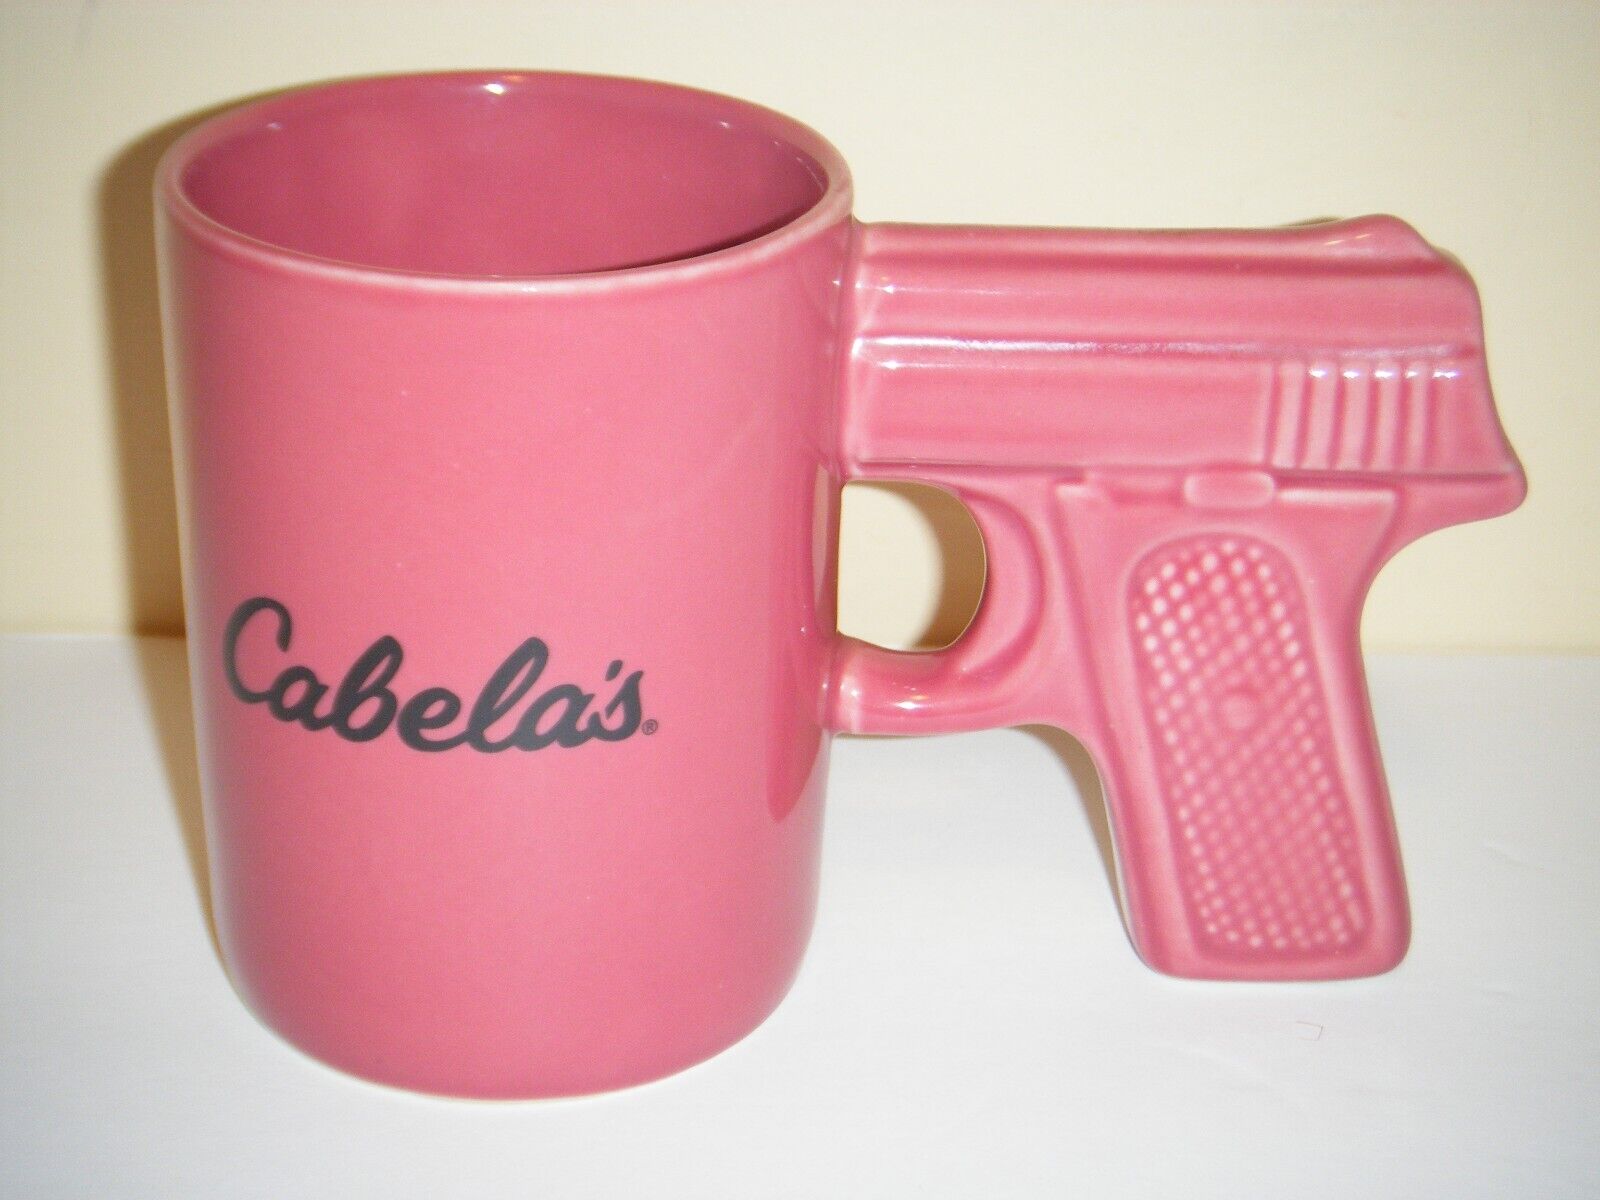 Cabelas Pistol Grip Handle Pink Ceramic Coffee Mug